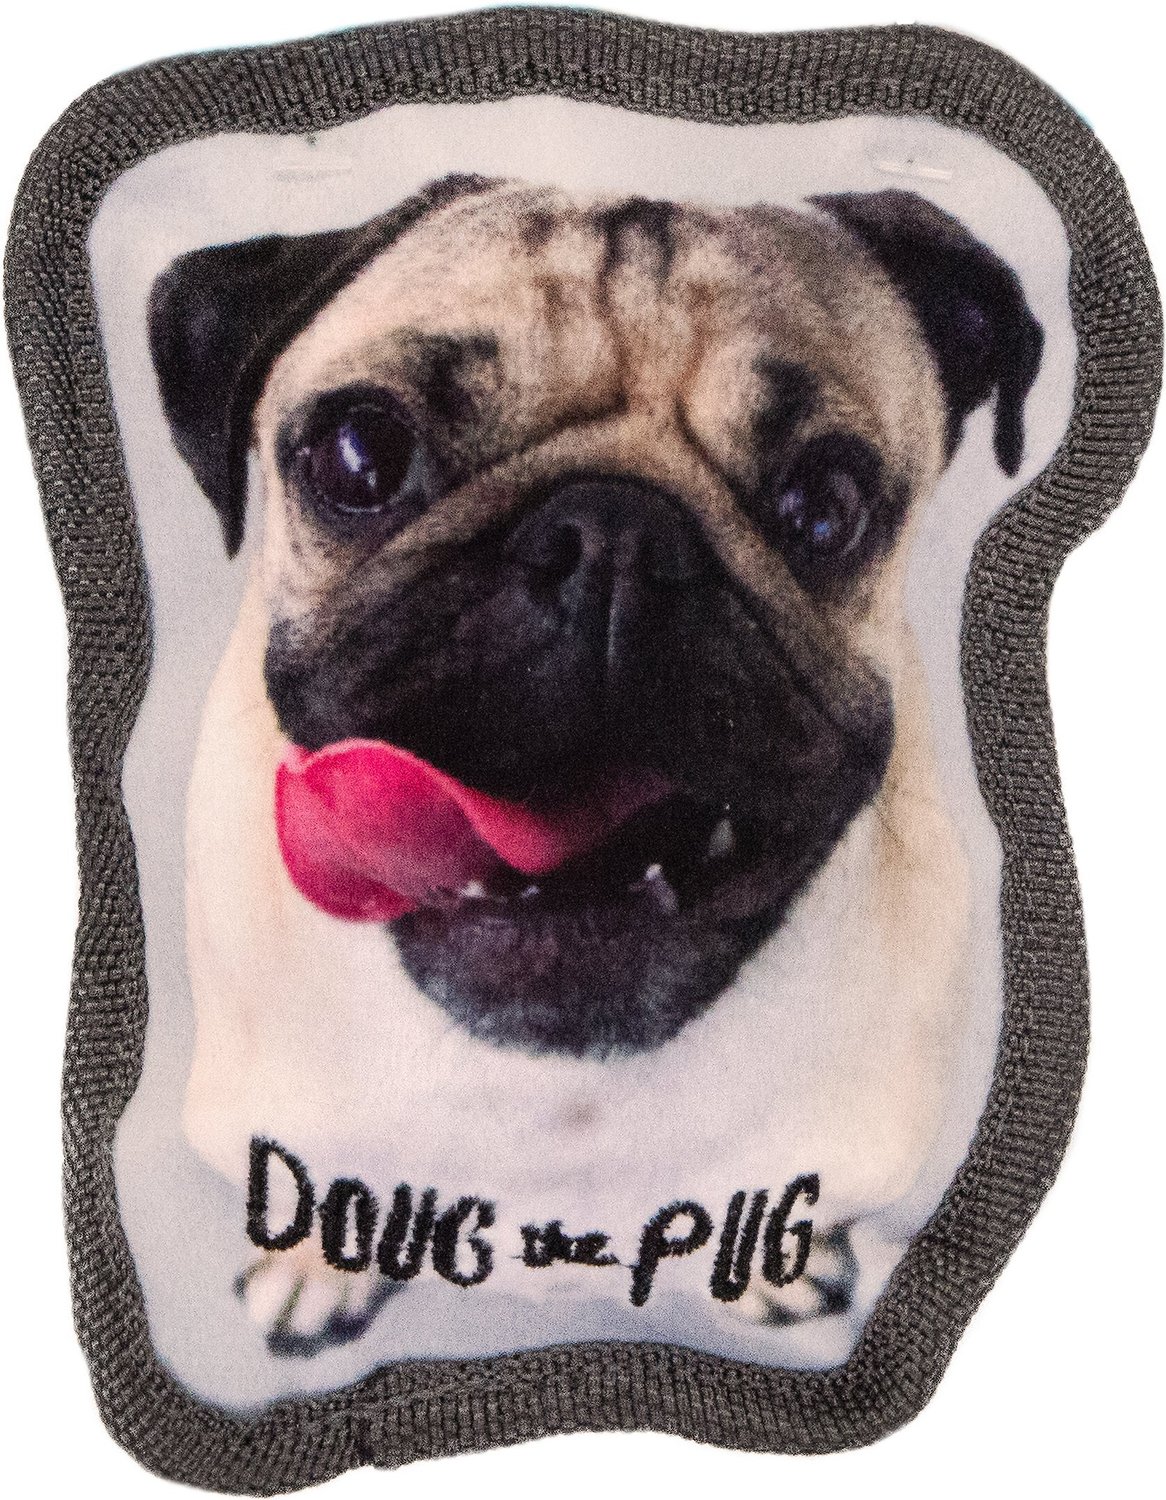 doug the pug soft toy